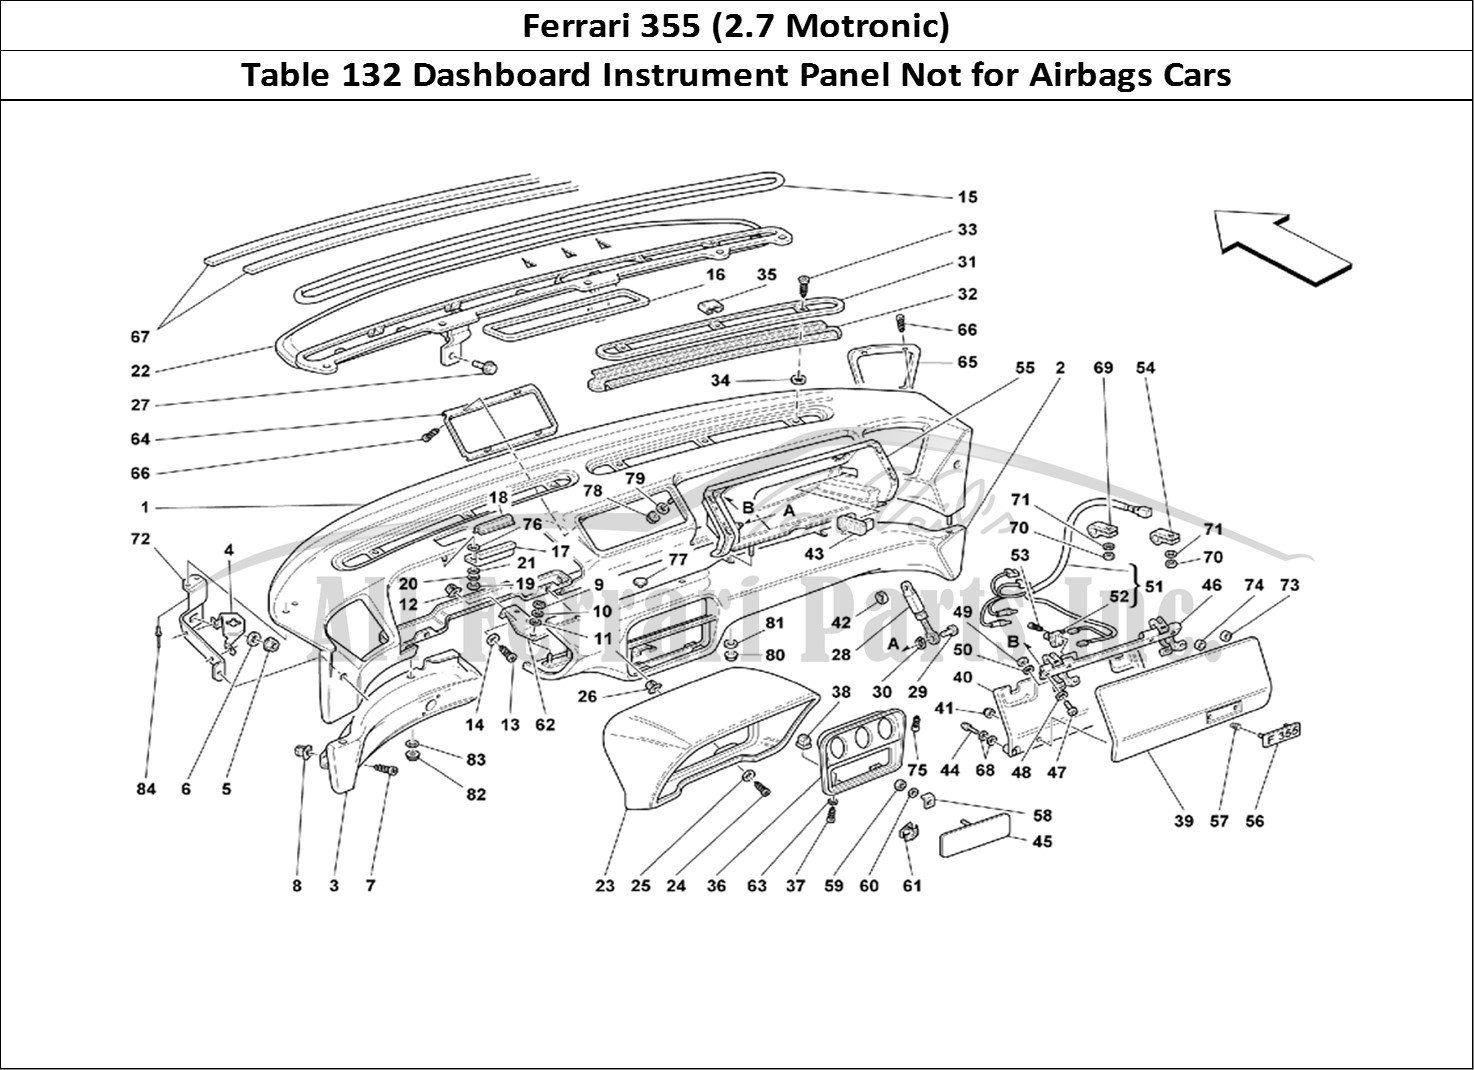 Ferrari Parts Ferrari 355 (2.7 Motronic) Page 132 Dashboard -Not for Air-Ba